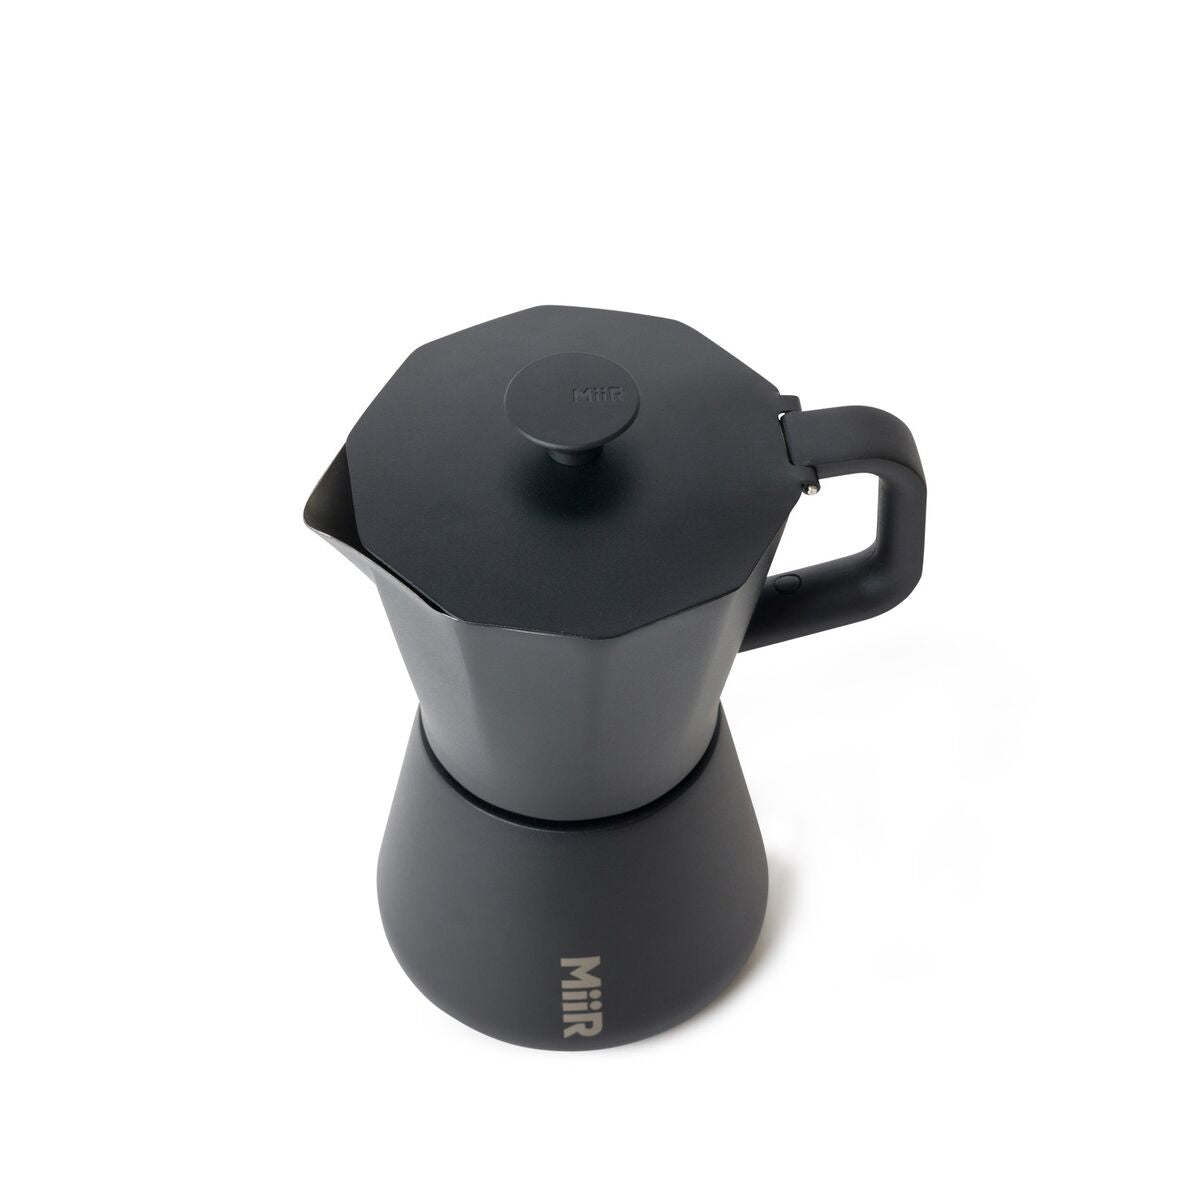 New Moka Pot StoveTop Italian Coffee Maker Percolator Mocha Pot Coffee Pot